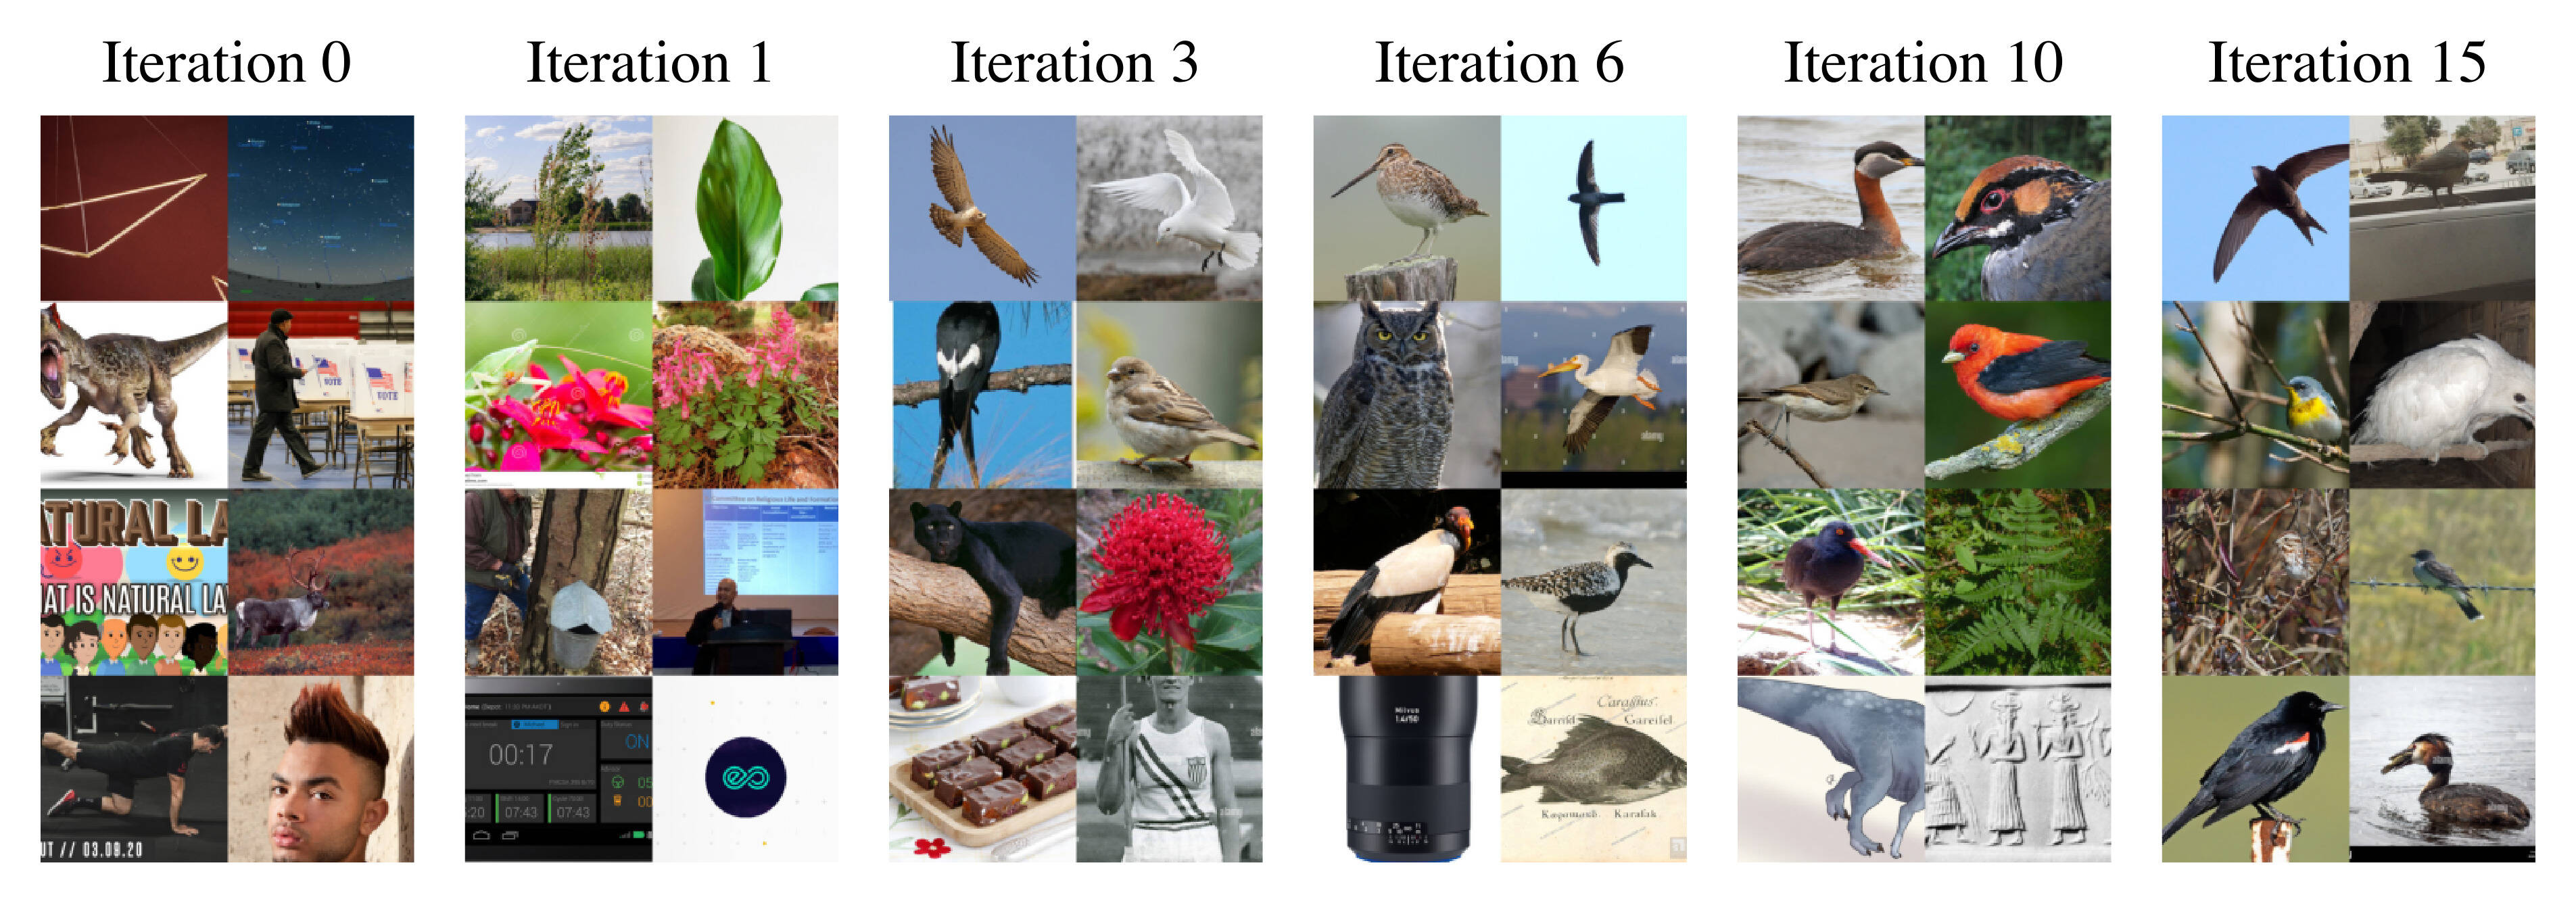 Birdsnap progression over iterations.